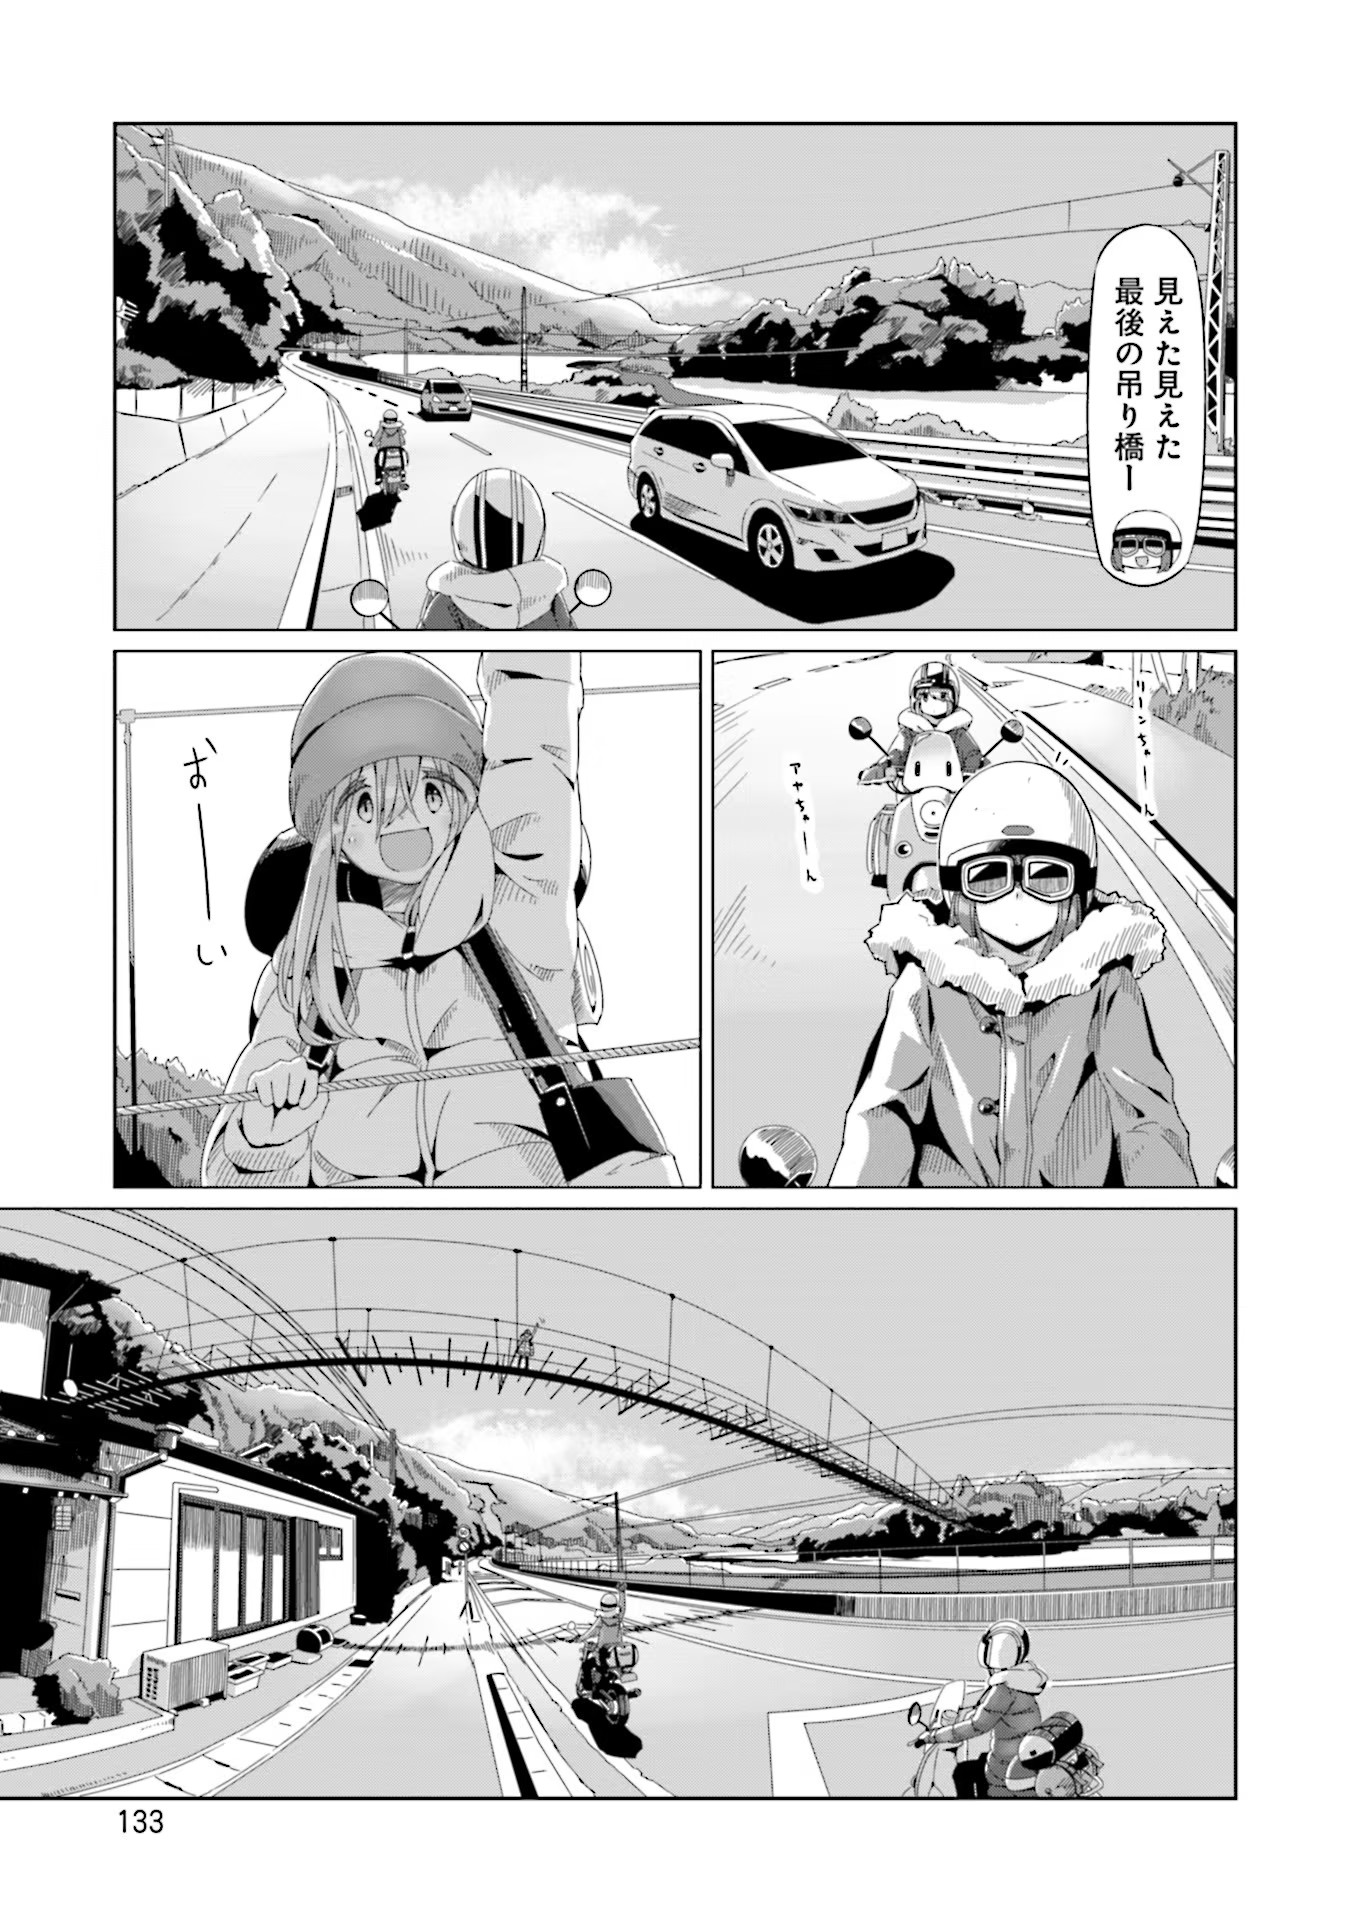 Yuru Camp - Chapter 63 - Page 1